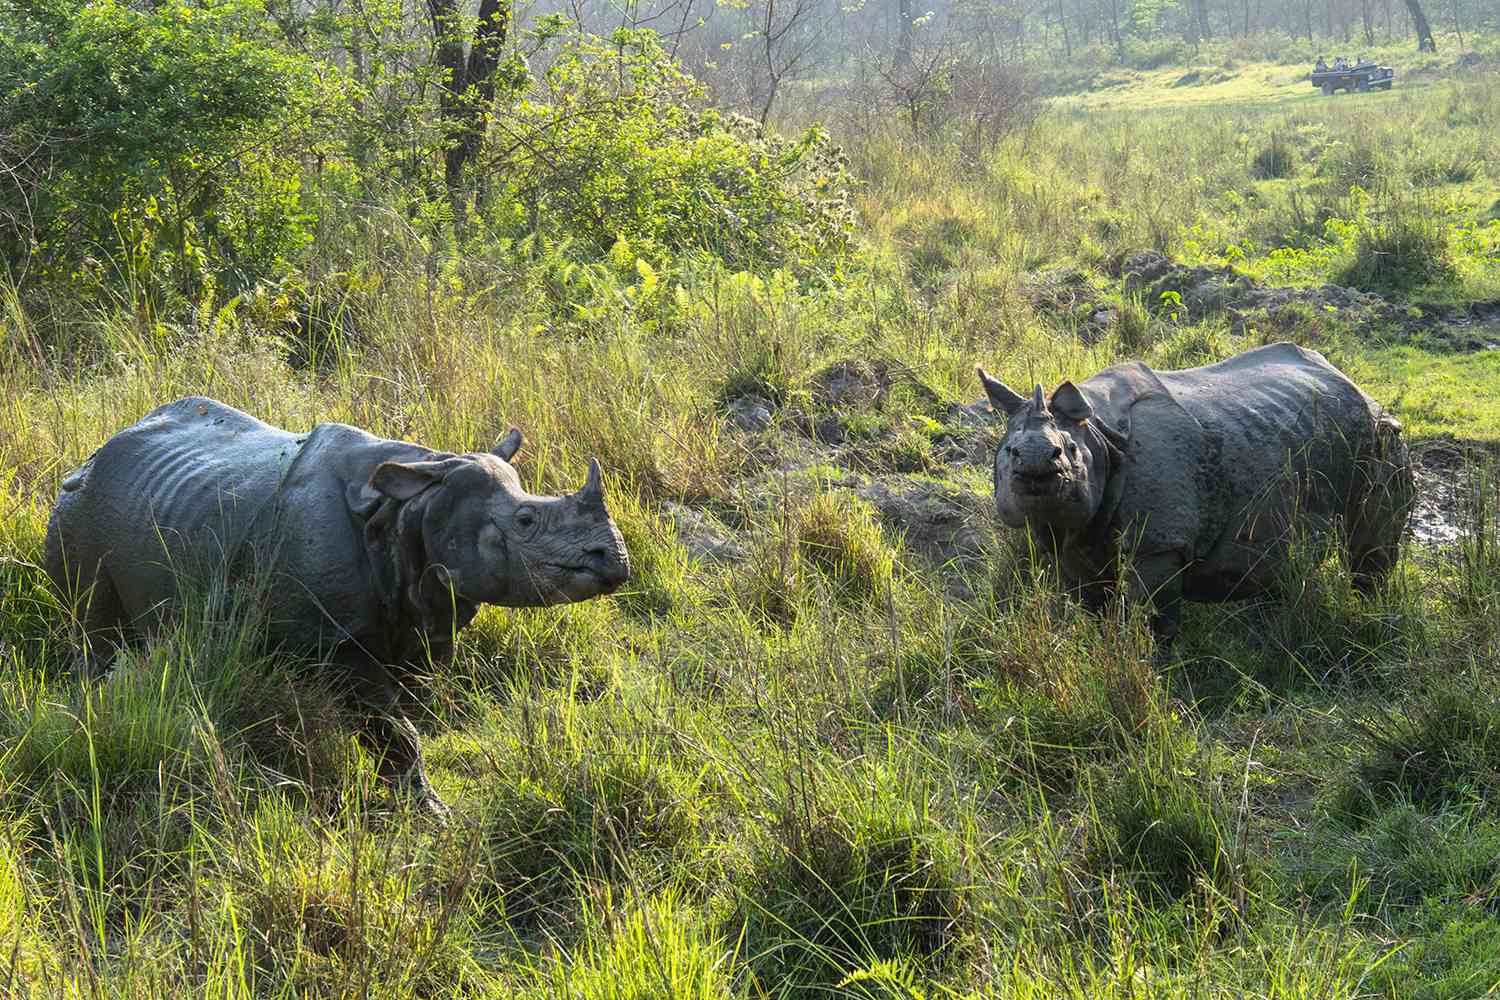 Nepal's Endangered Rhino Population Experiences Major Growth